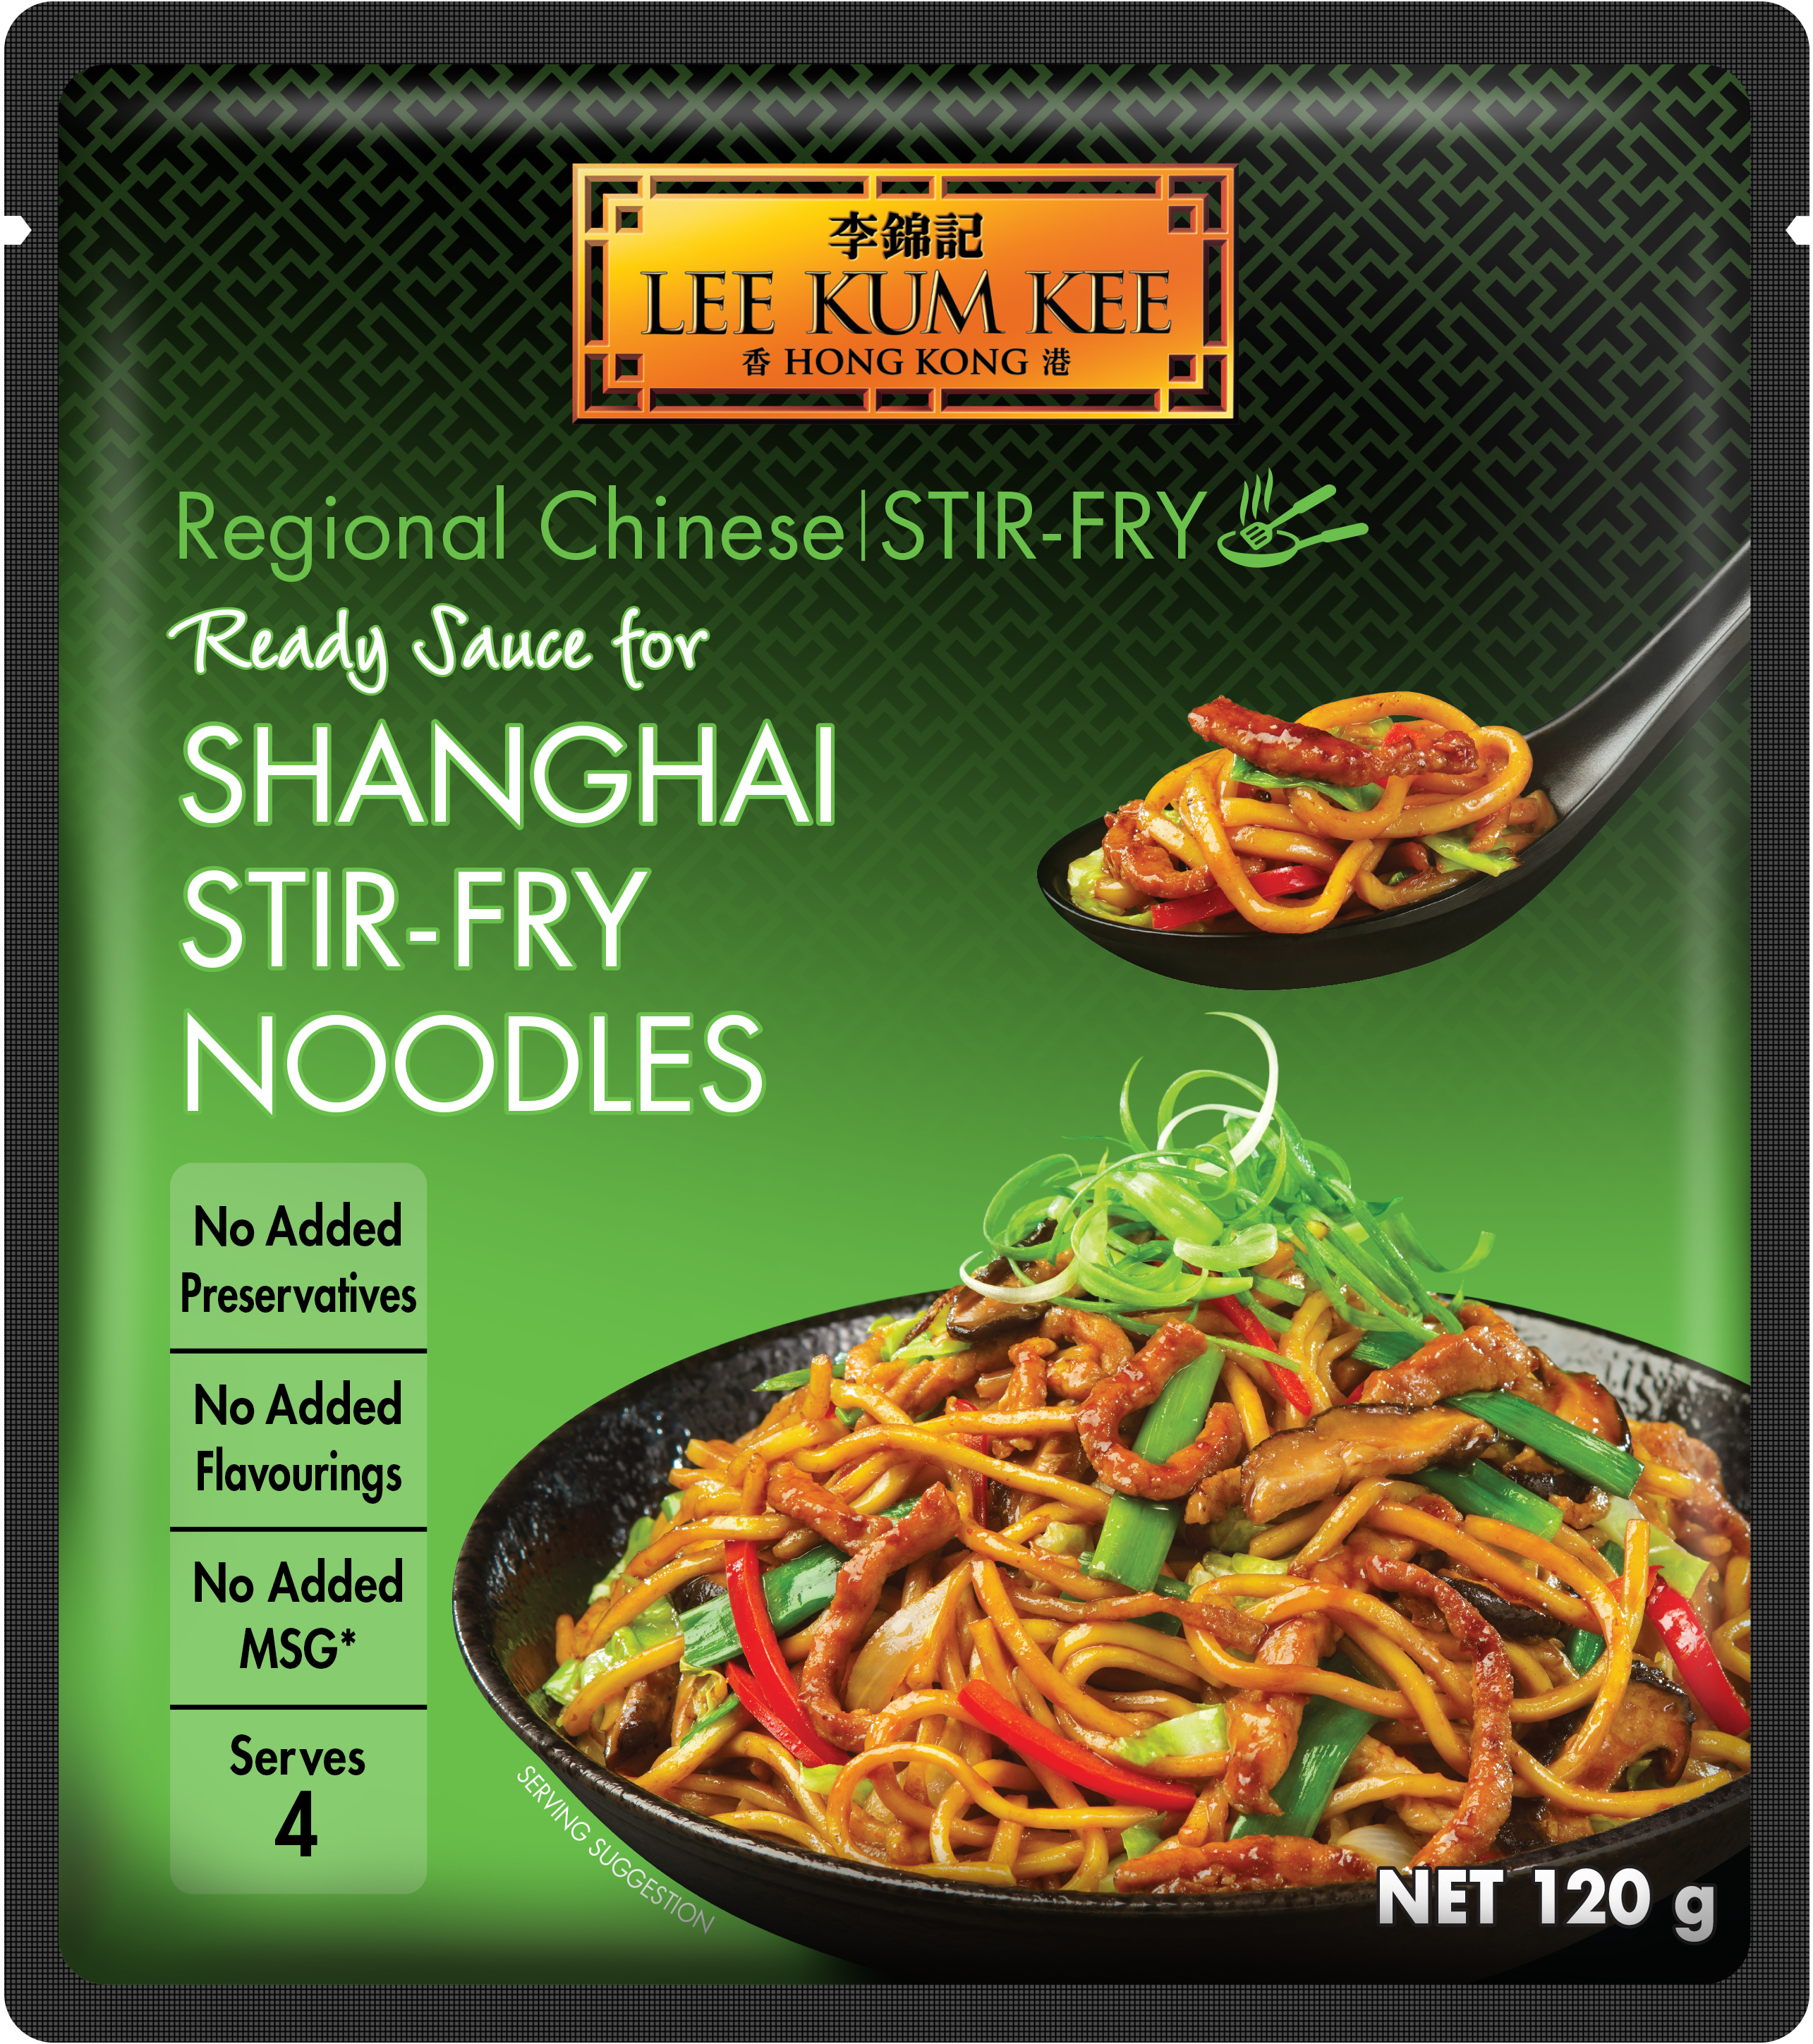 Ready Sauce for Shanghai Stir-fry Noodle